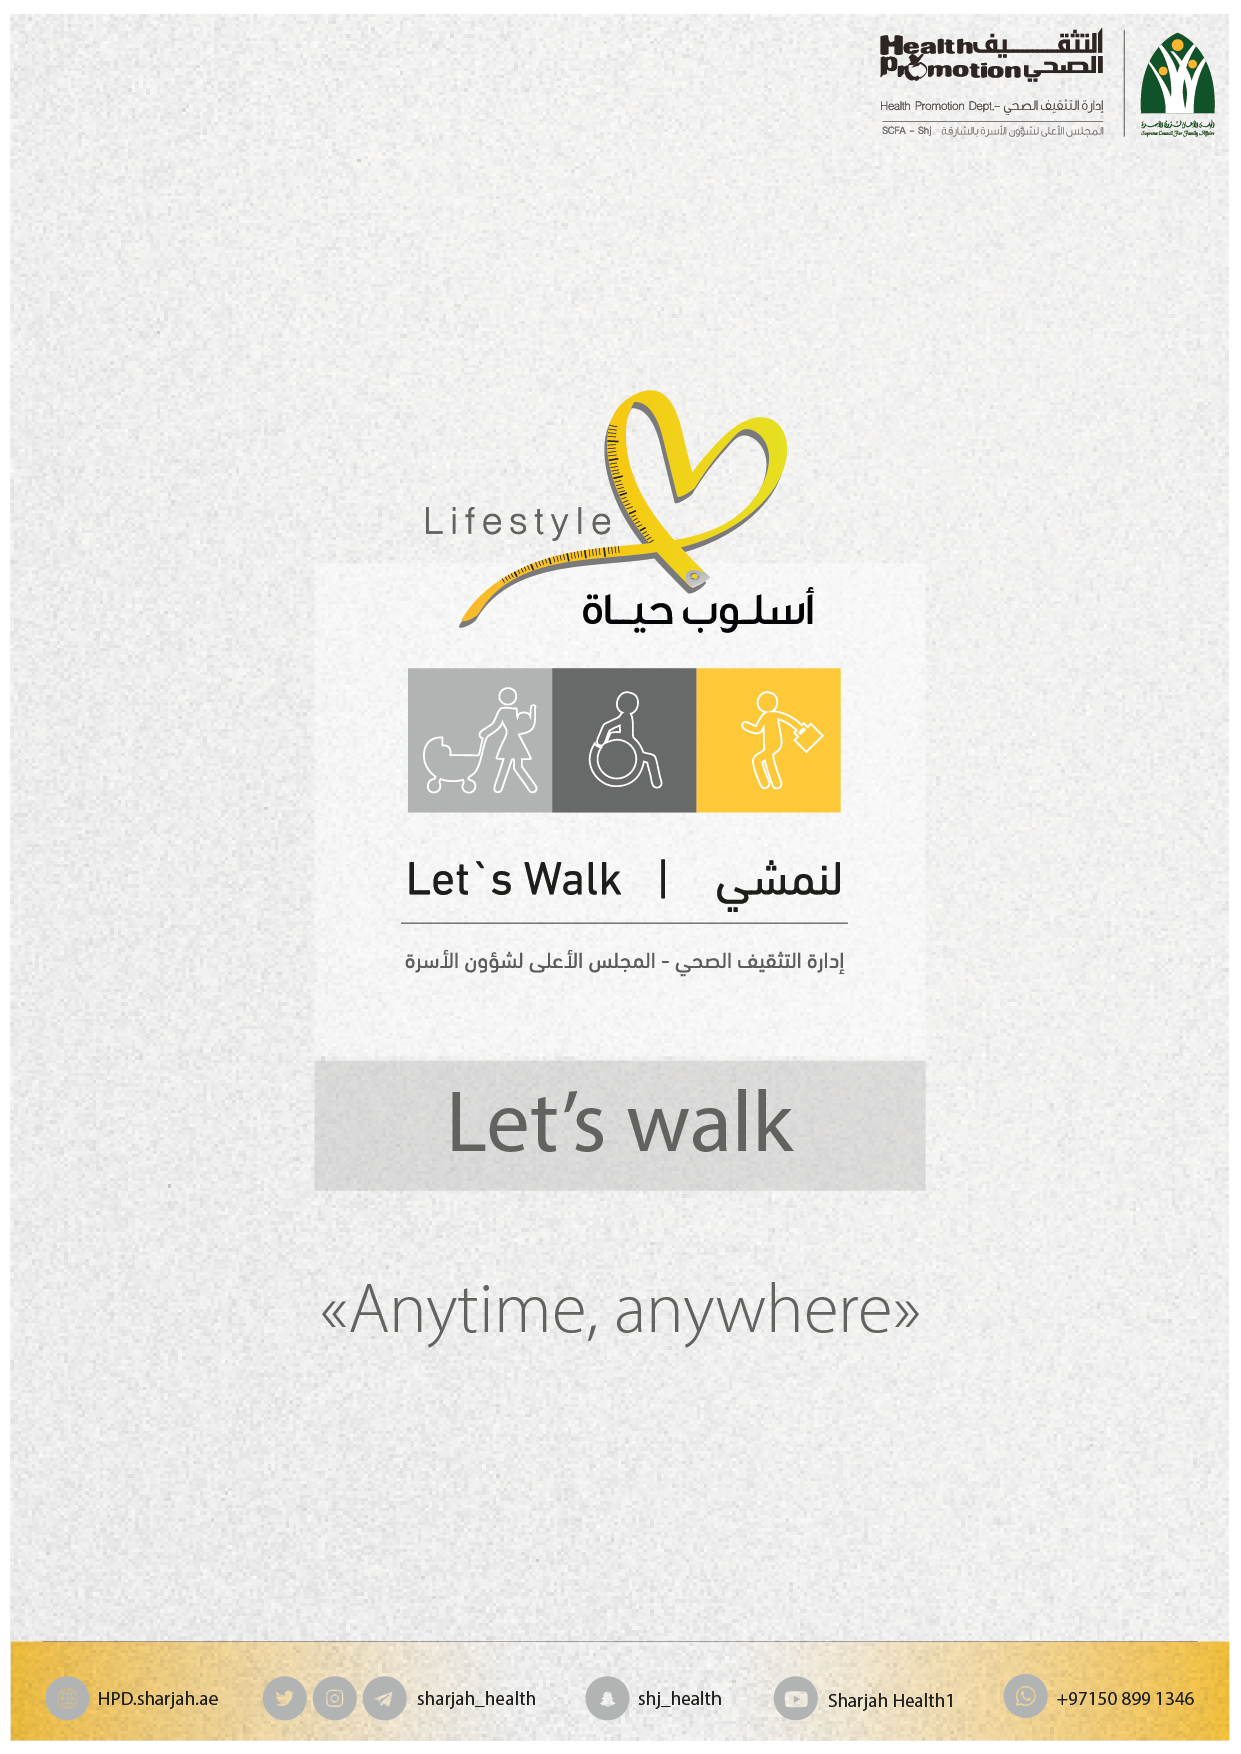 Let's Walk